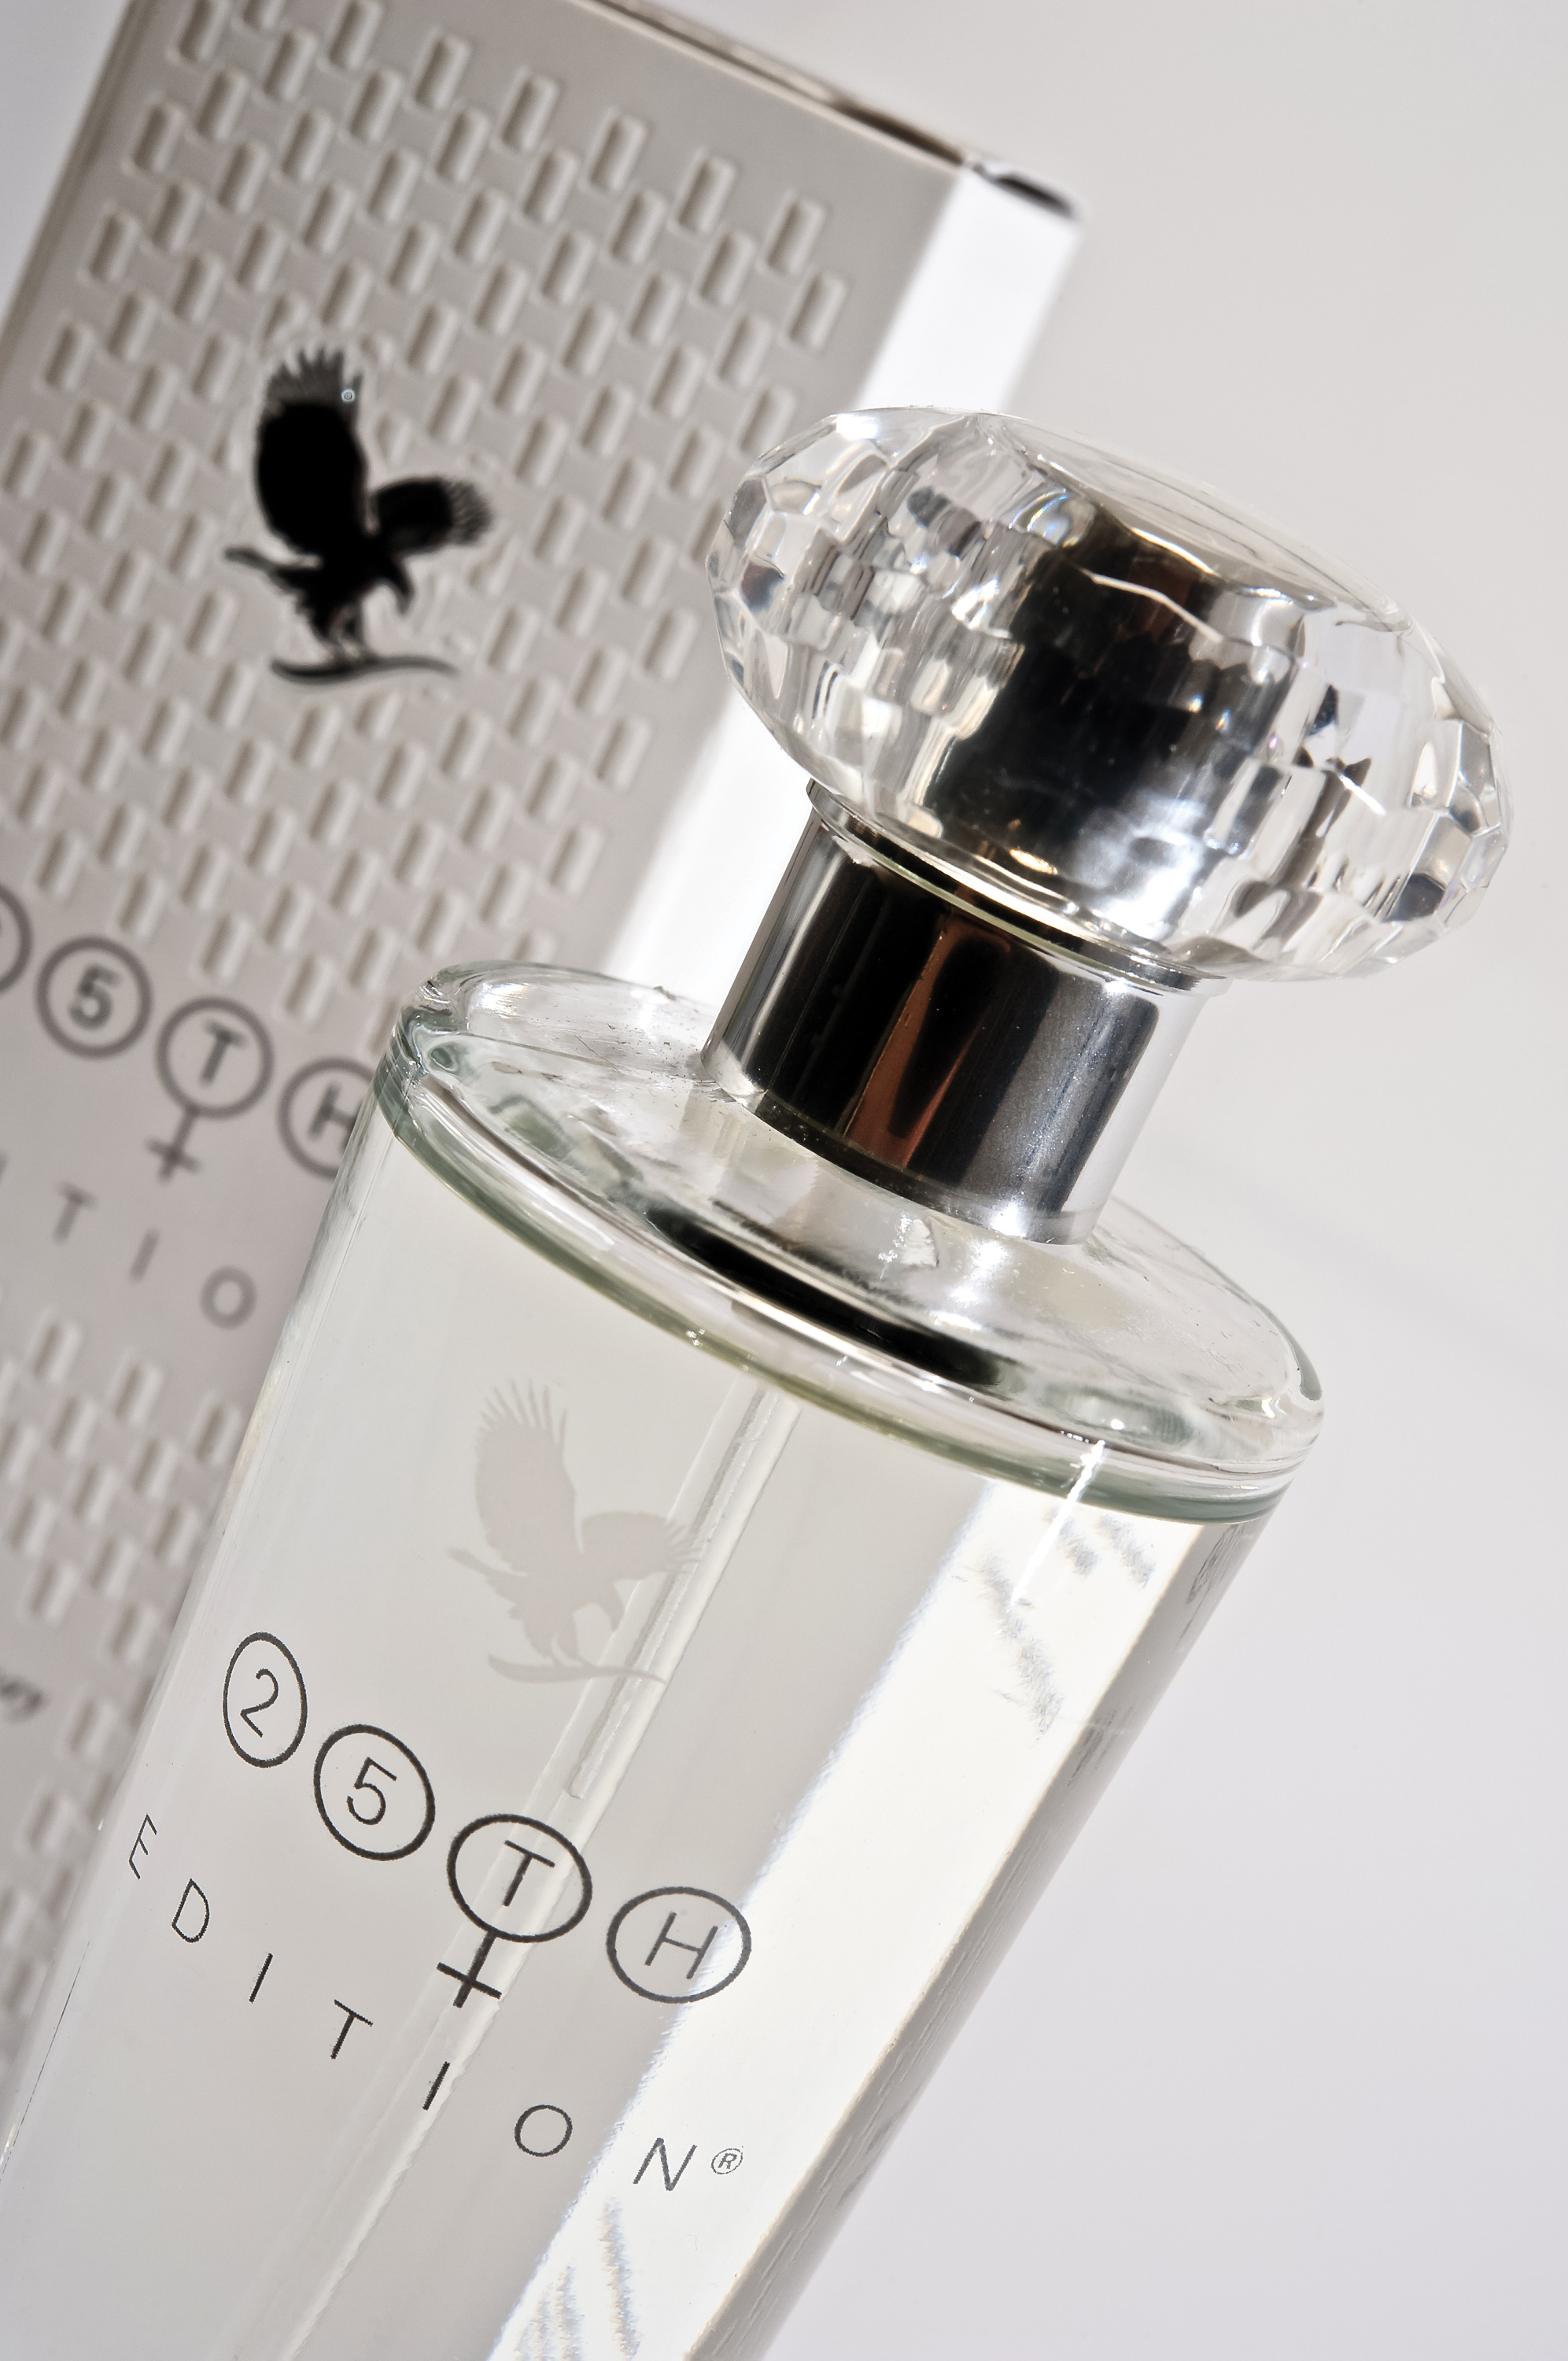  ۲۵th Edition Perfume Spray For Women کد ۲۰۸